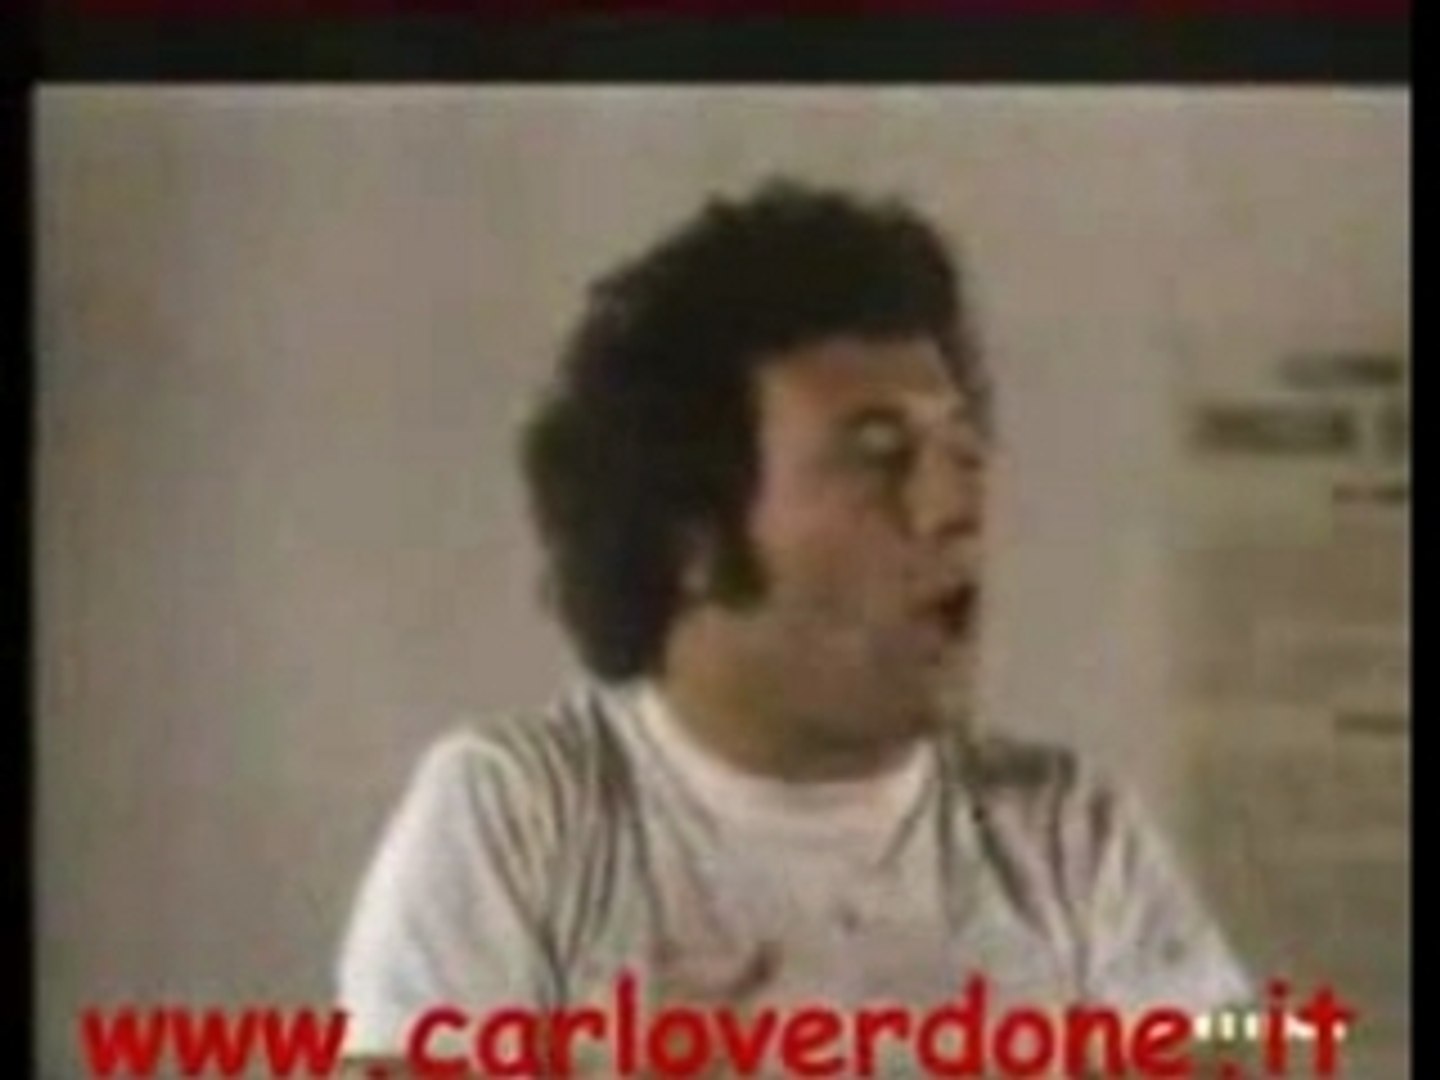 Carlo Bianco e verdone - Video Dailymotion